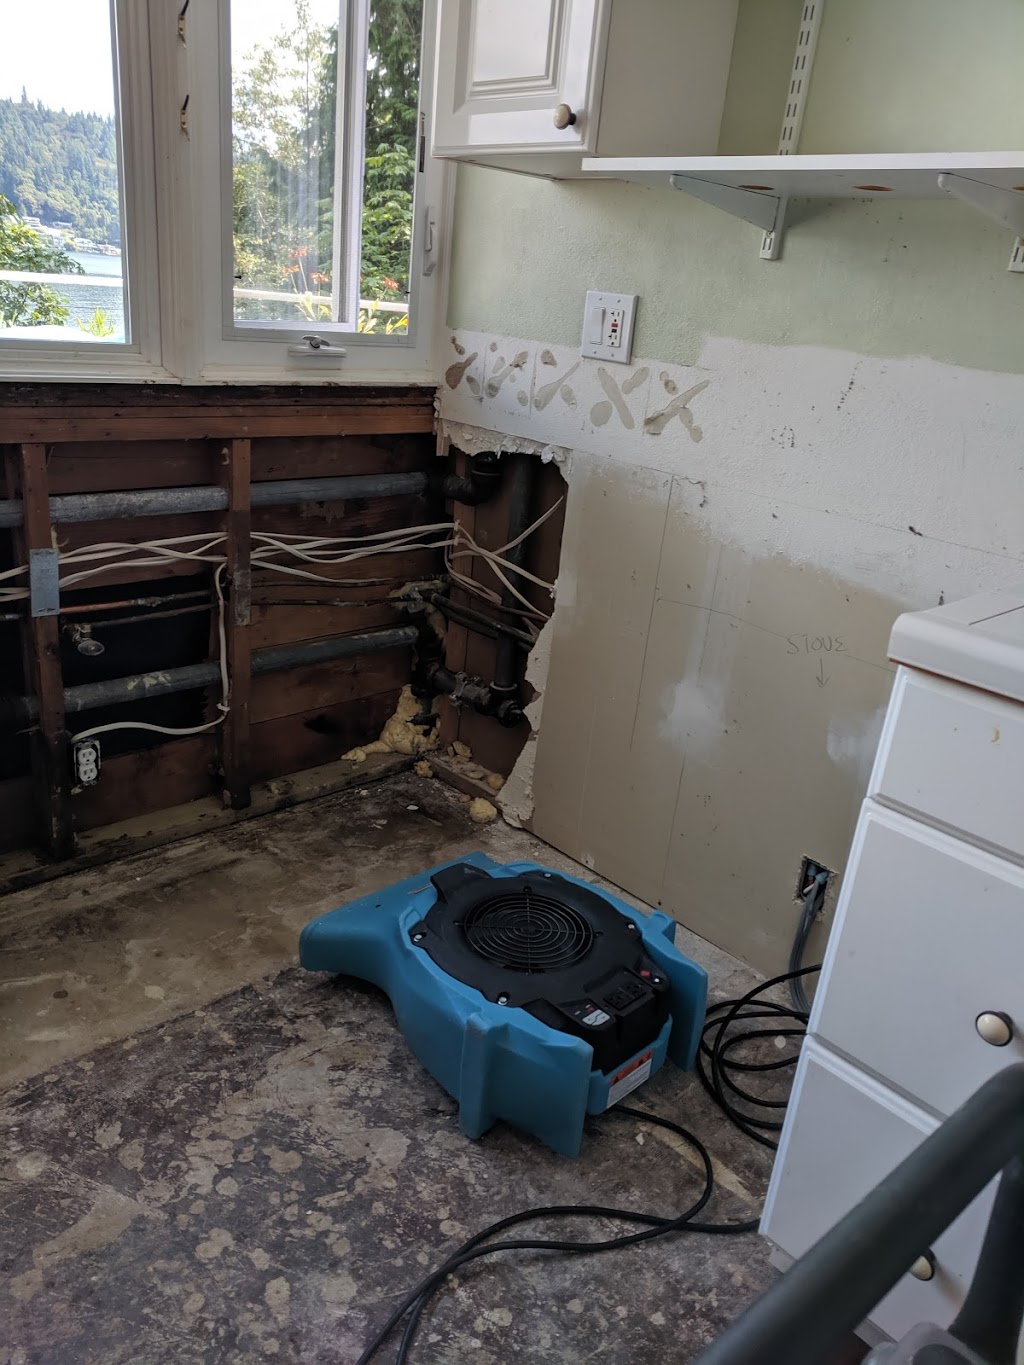 Alpine Cleaning and Restoration | 1620 75th St SW, Everett, WA 98203, USA | Phone: (425) 970-8205